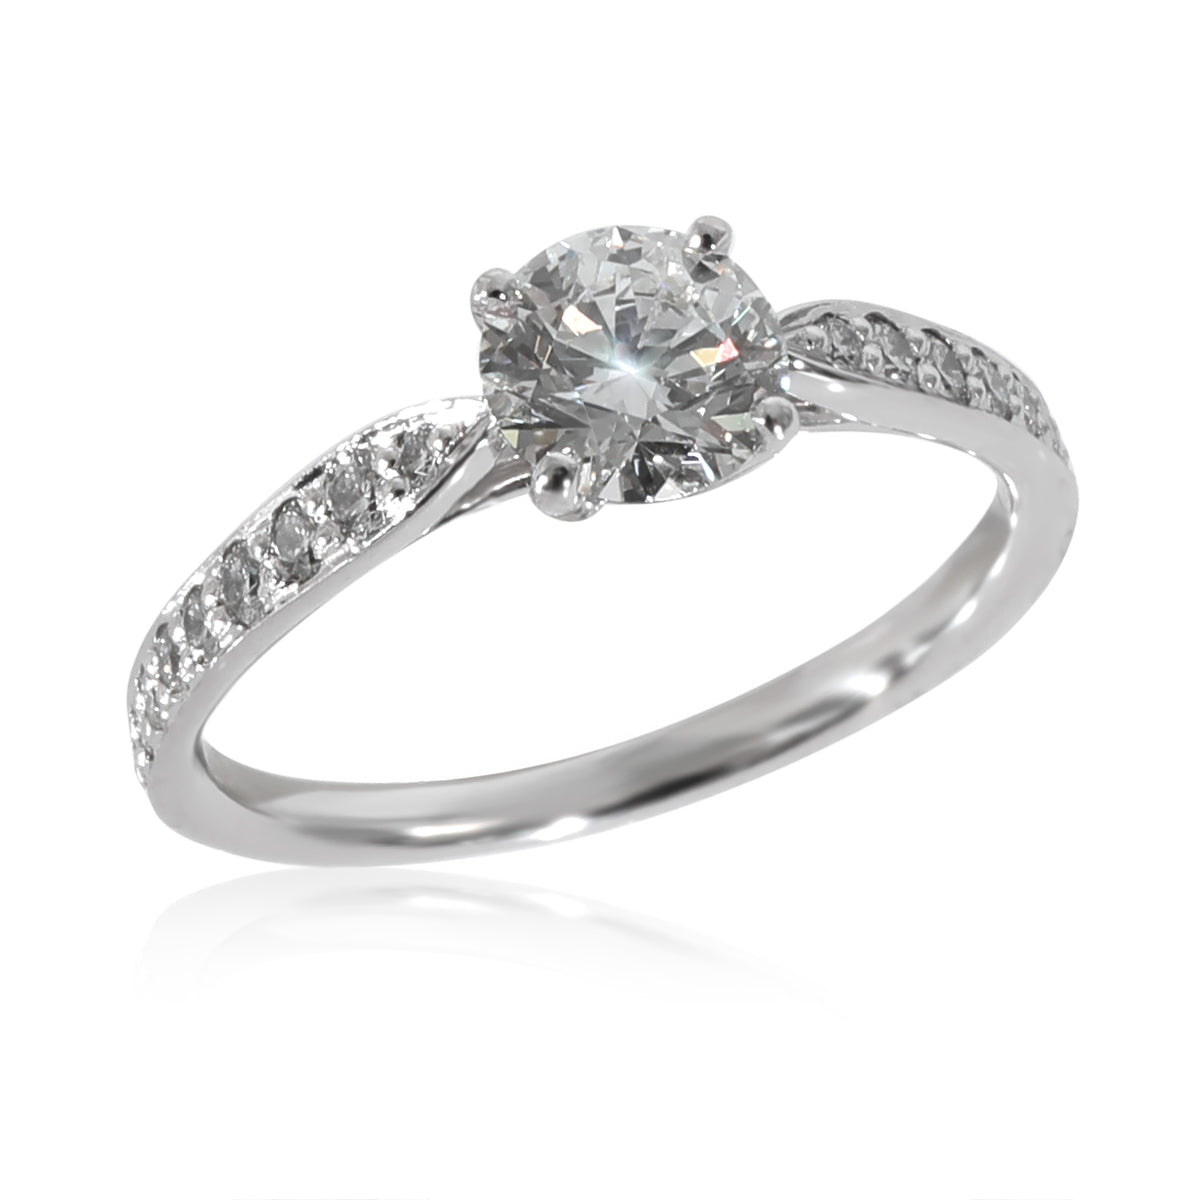 Tiffany & Co. Harmony Diamond Engagement Ring in  Platinum G VS1 0.77 CT